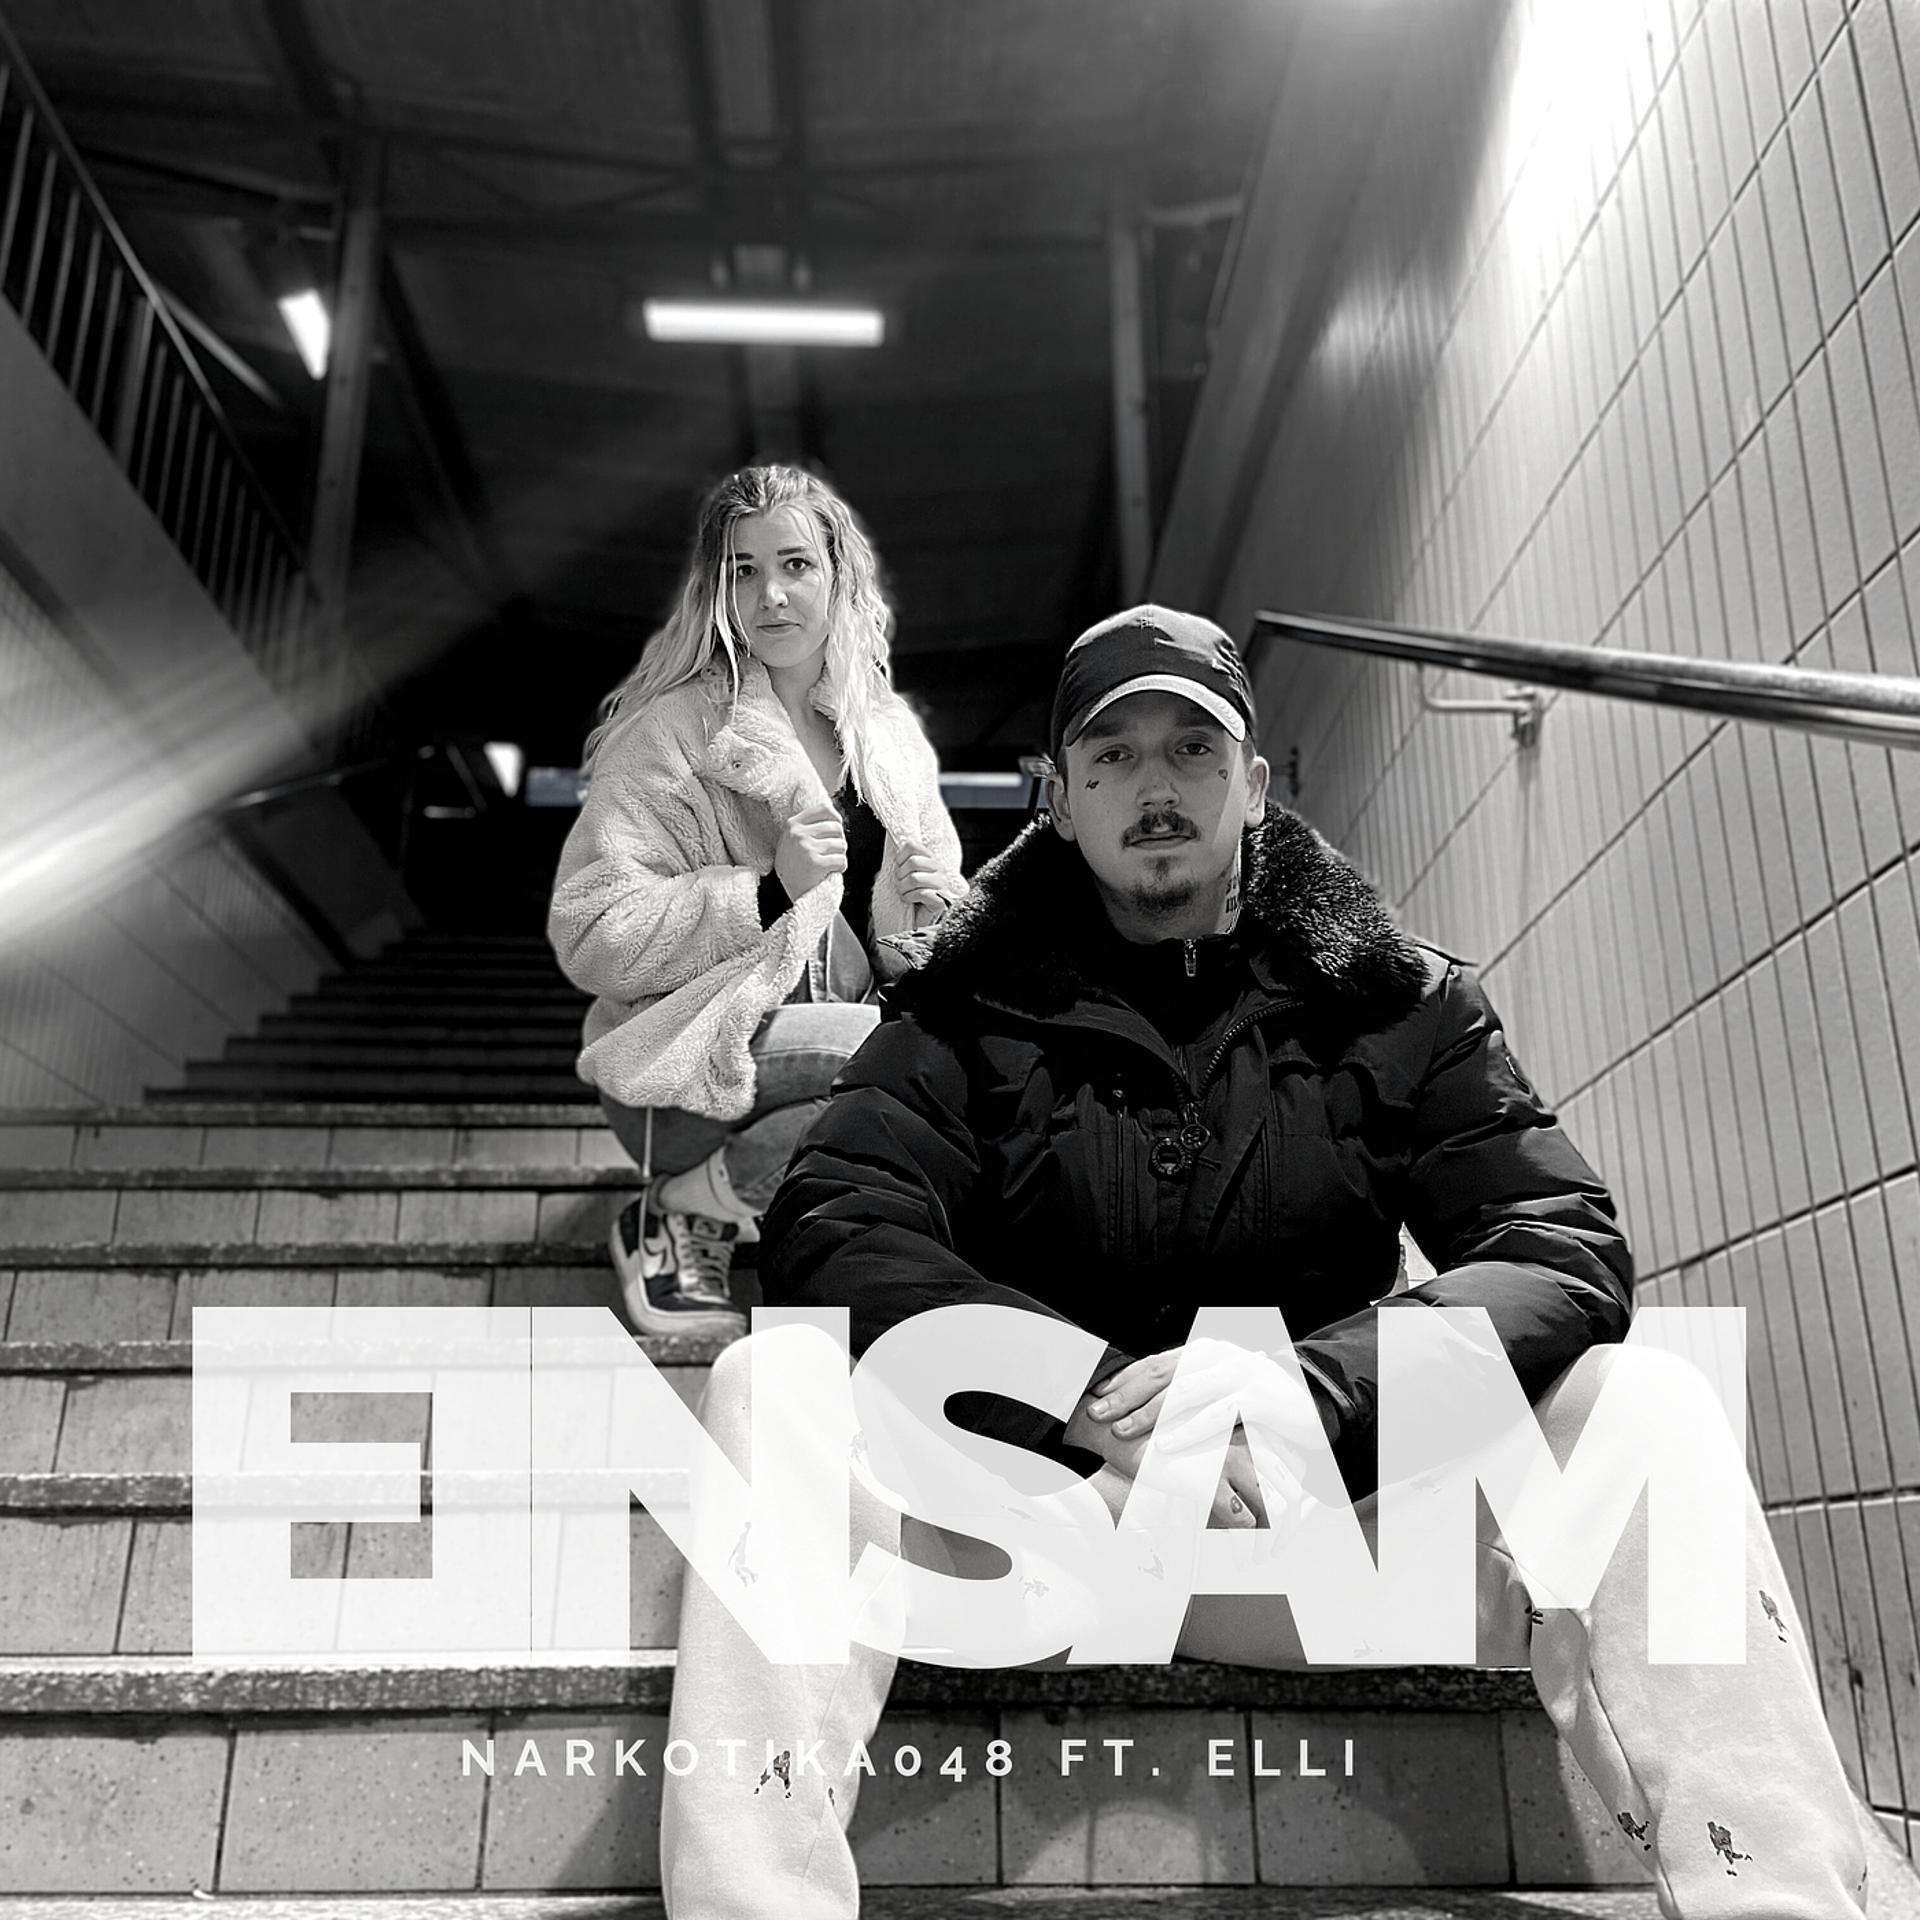 Постер альбома Einsam